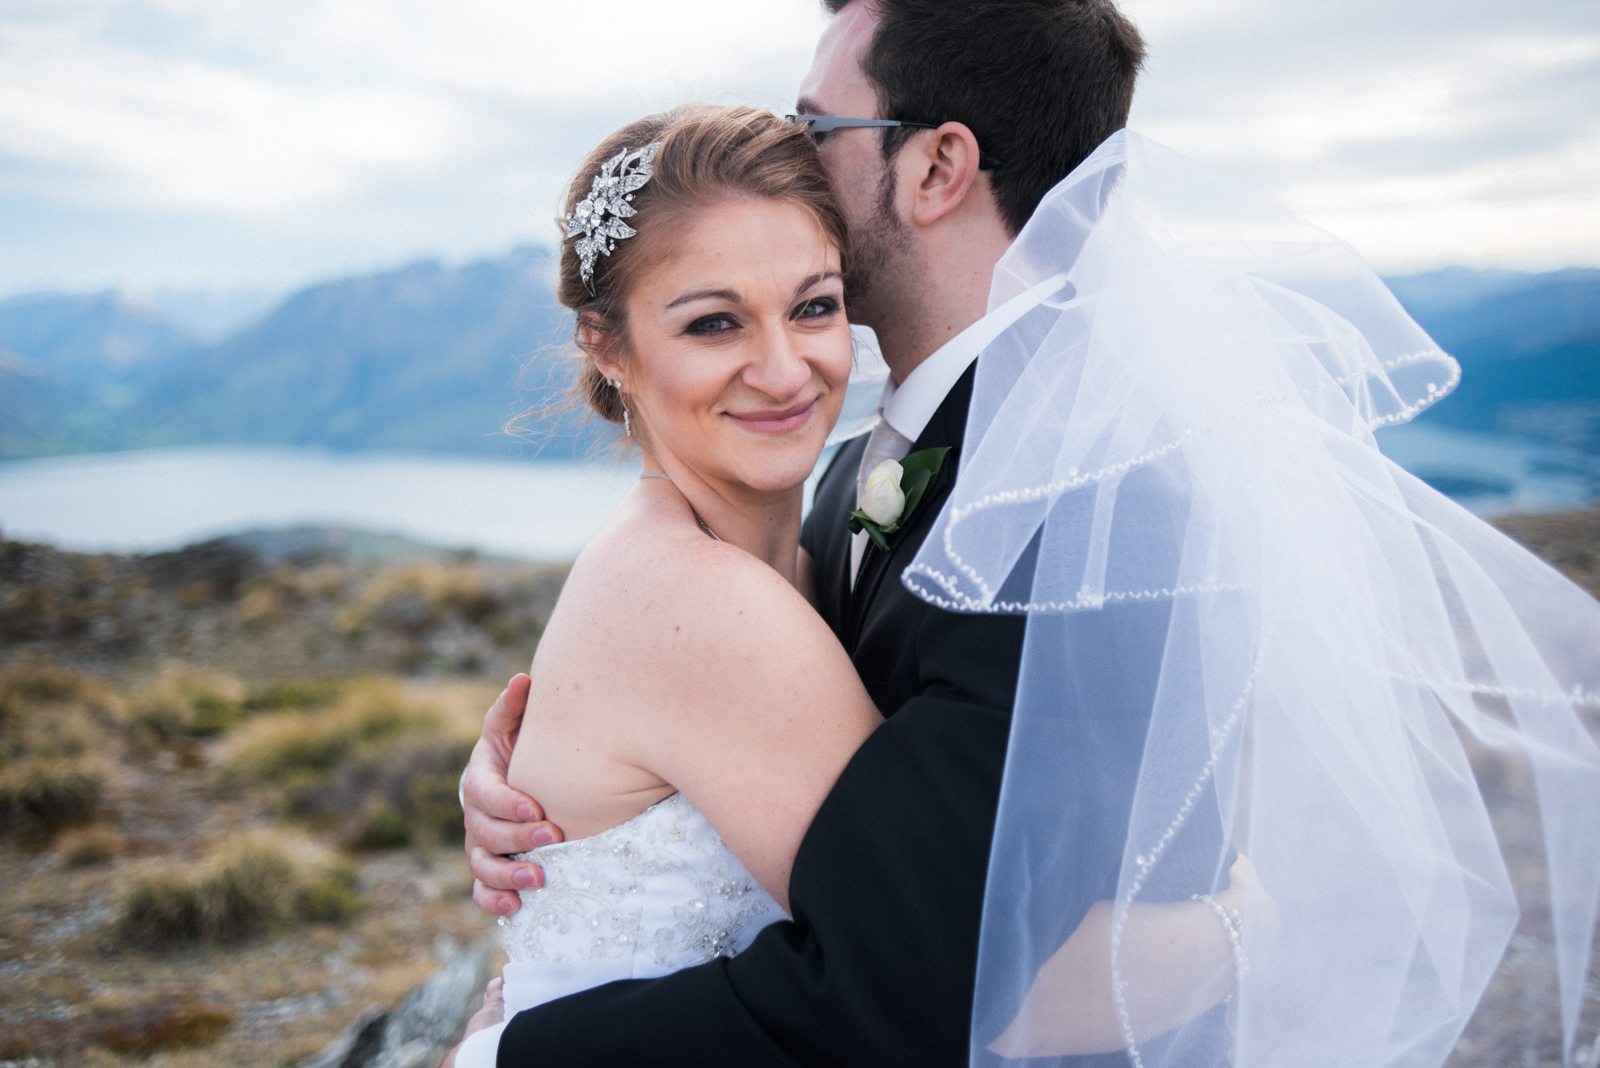 Gore-Invercargill-Wedding-Photographer-Queenstown-Wanaka-Destination-Elope-New-Zealand-Mountains-Helicopter29